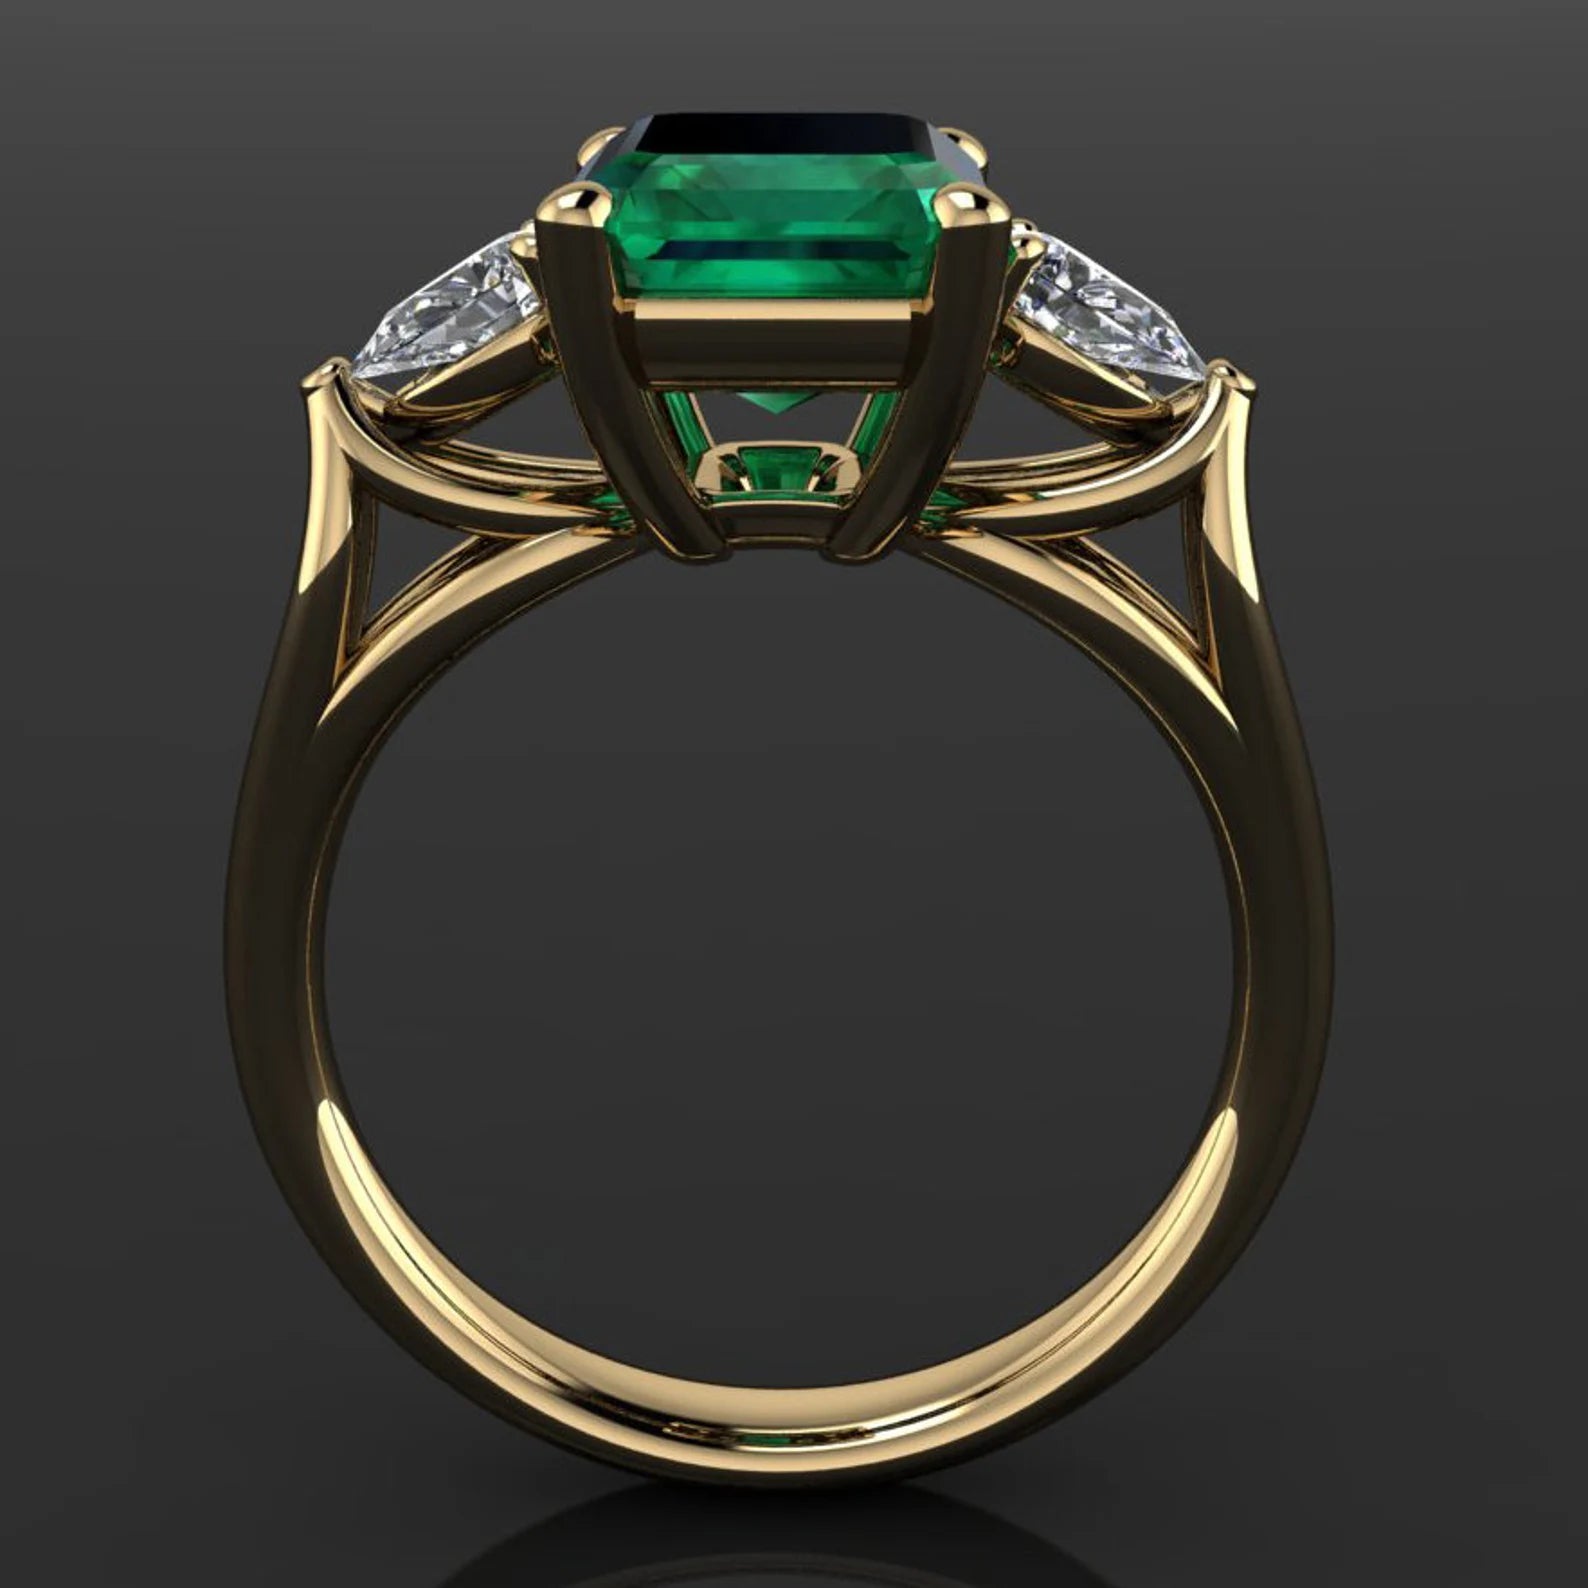 crazy rich asians ring - 4 carat green moissanite ring, emerald cut ZAYA moissanite - J Hollywood Designs